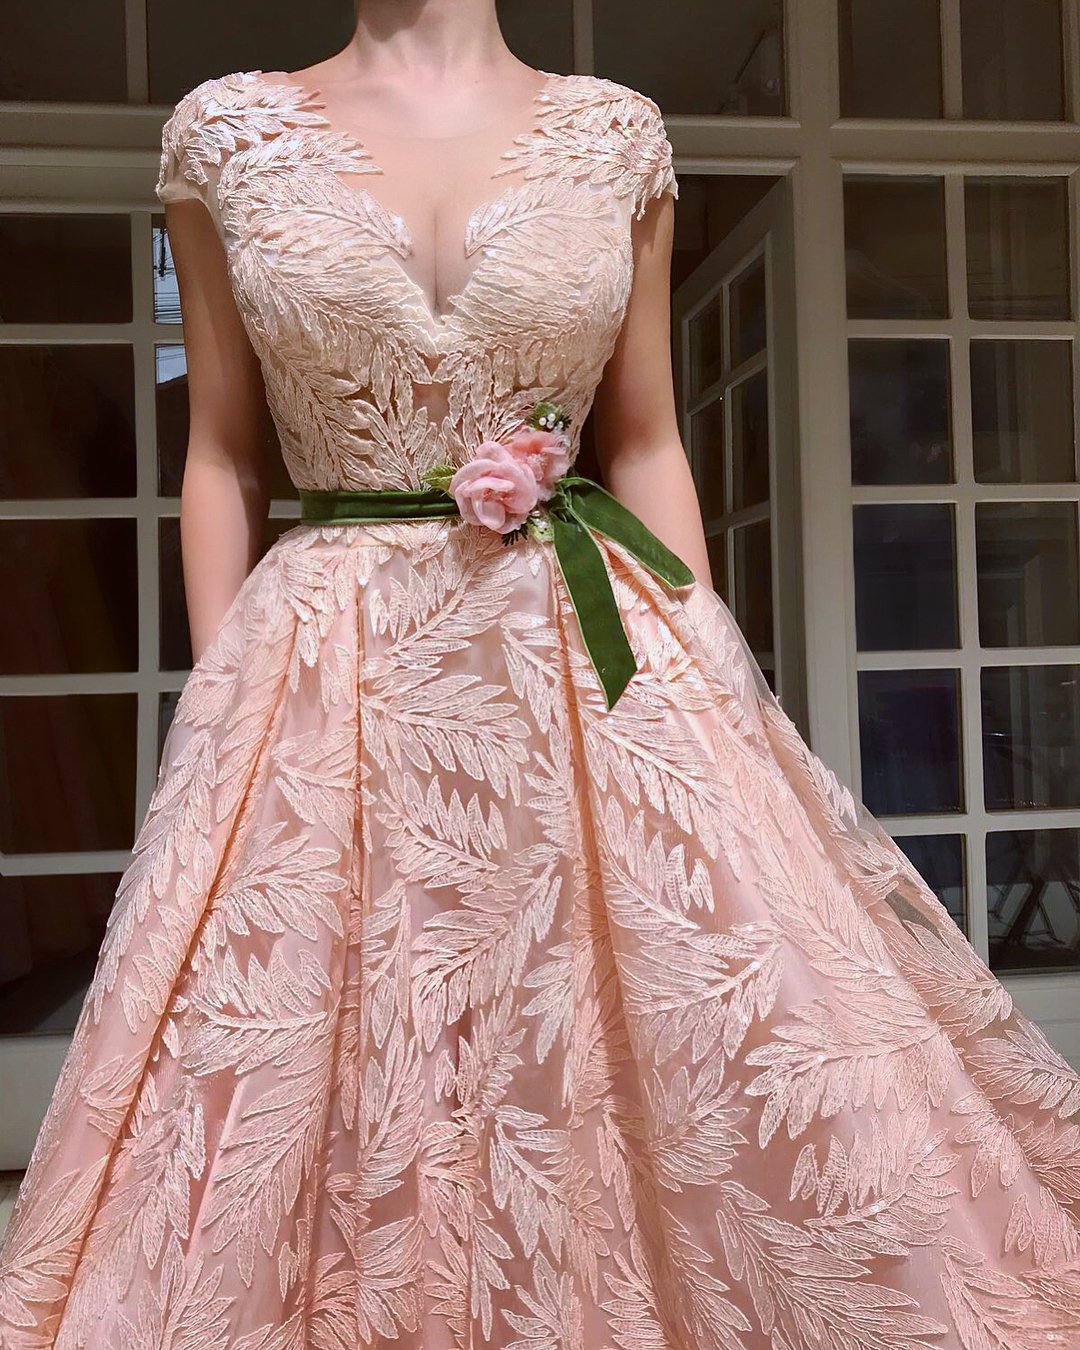 de modas confecciona hermosos vestidos floreados